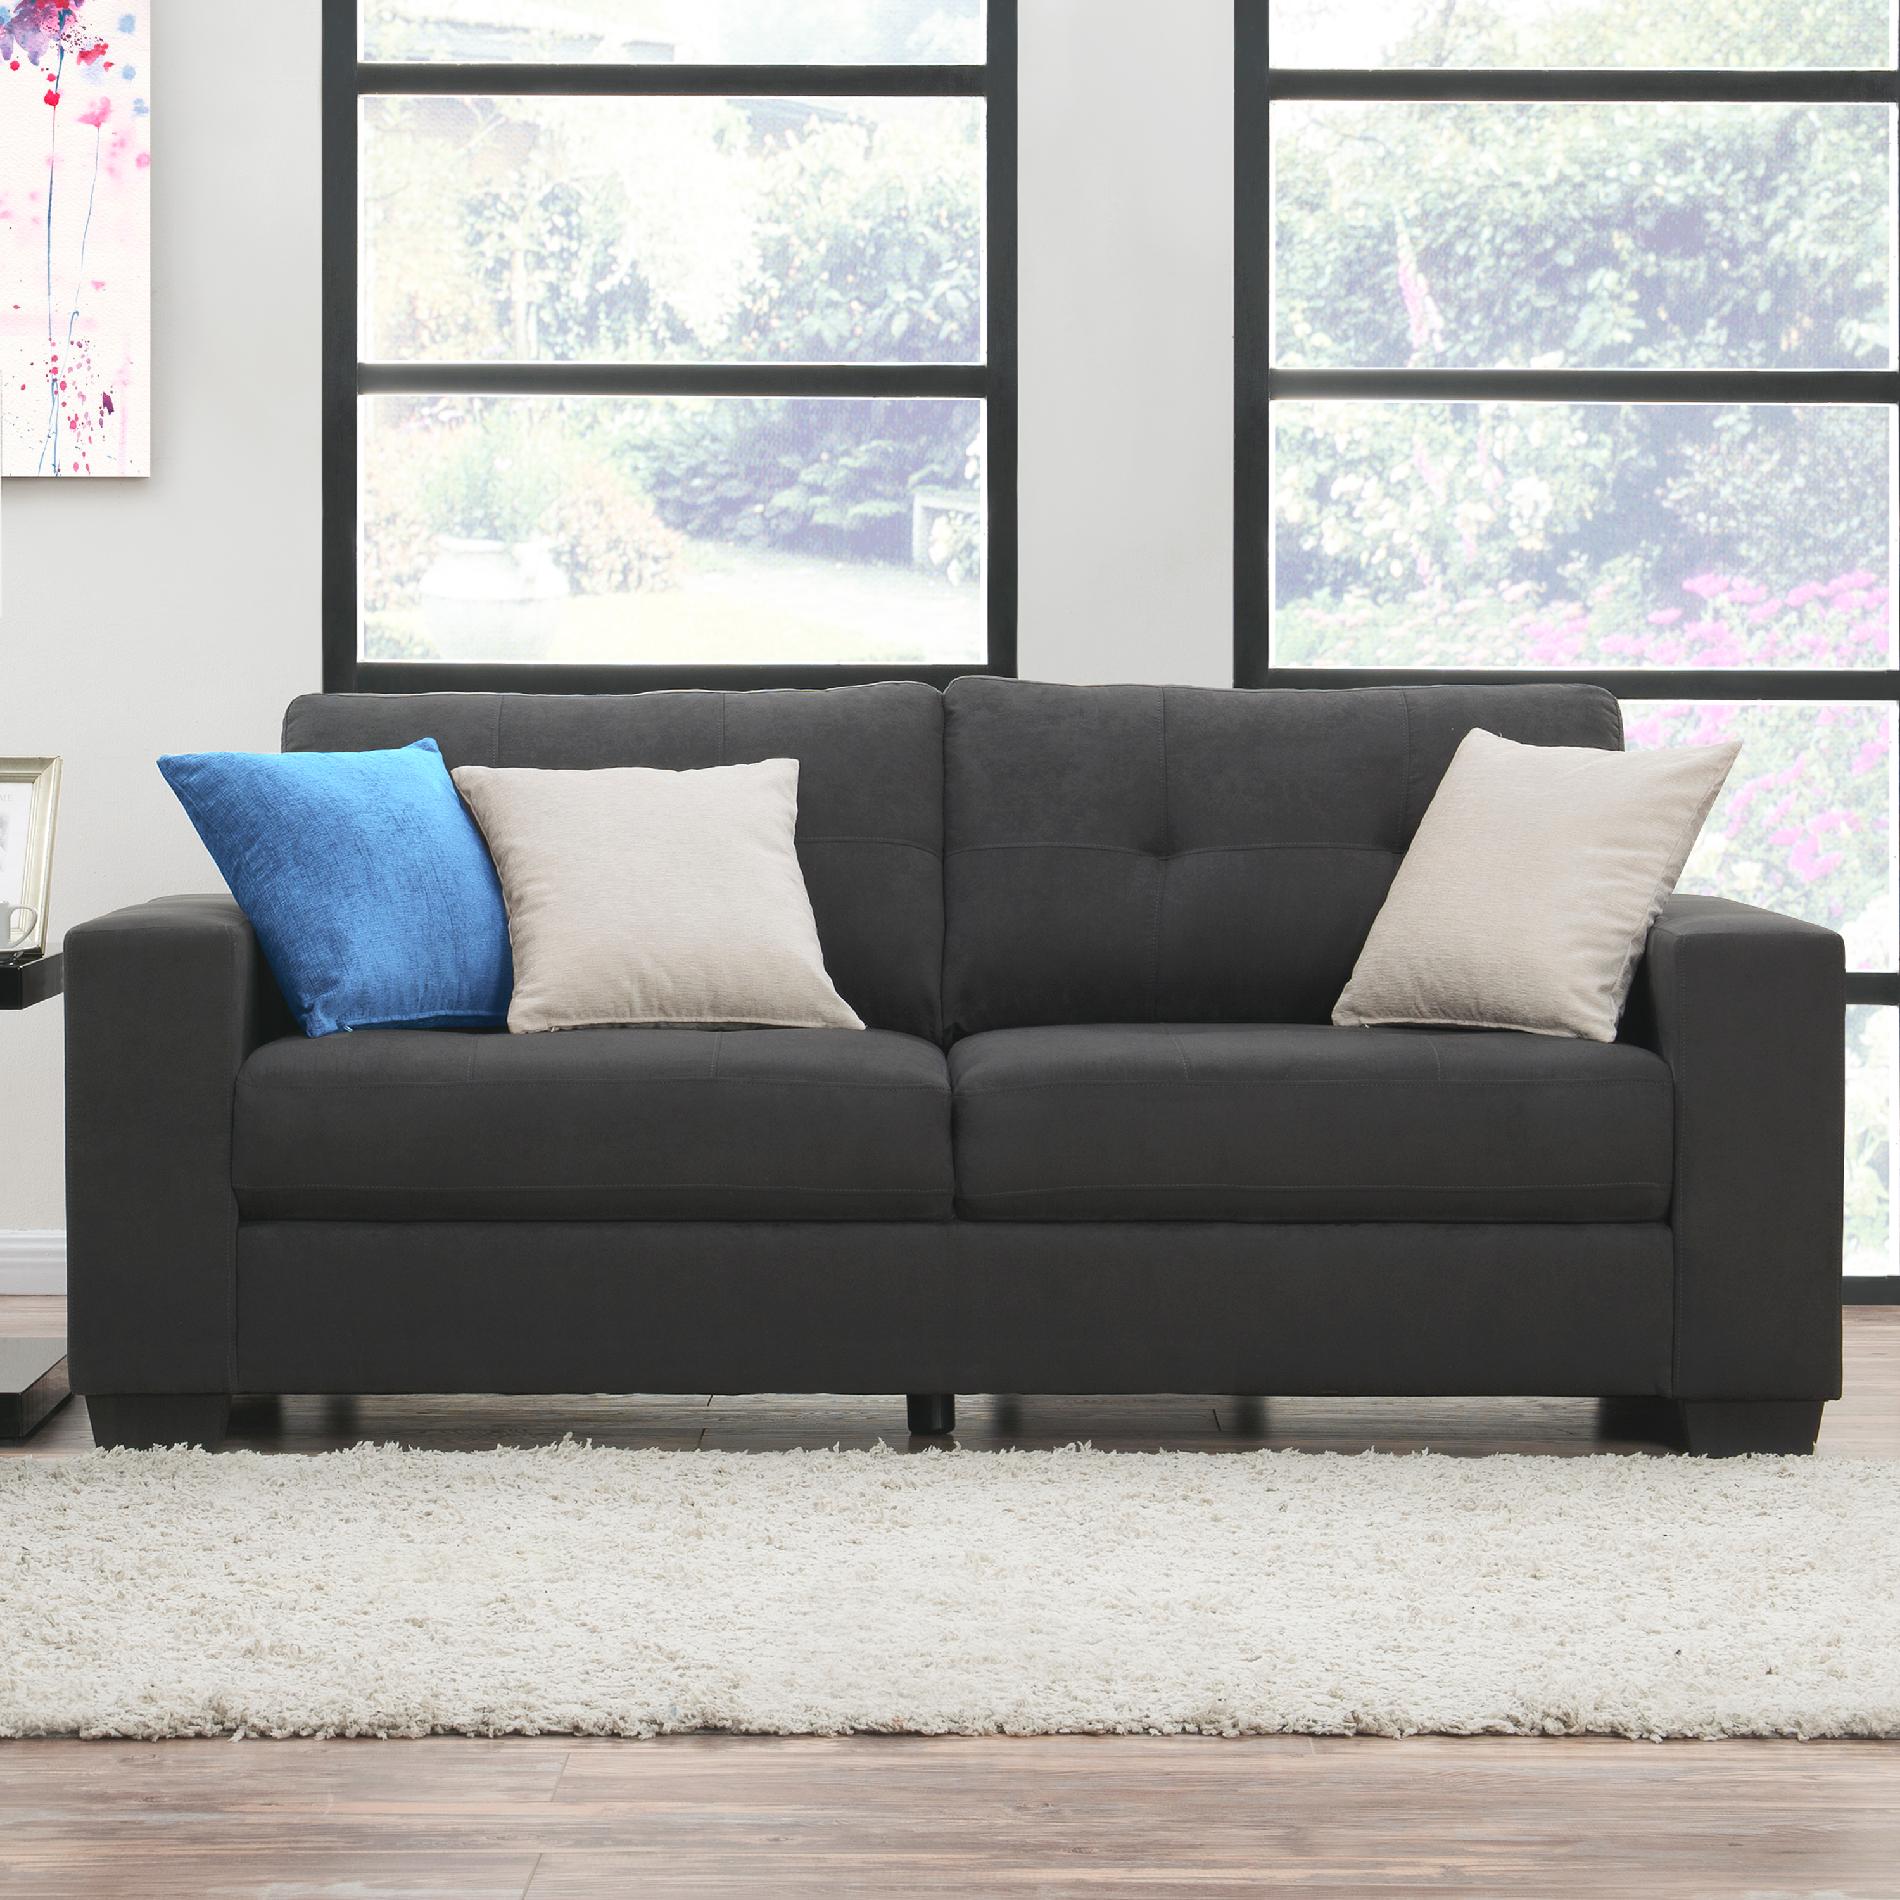 Dorel Home Furnishings Microfiber Sofa Asher Gray Sears